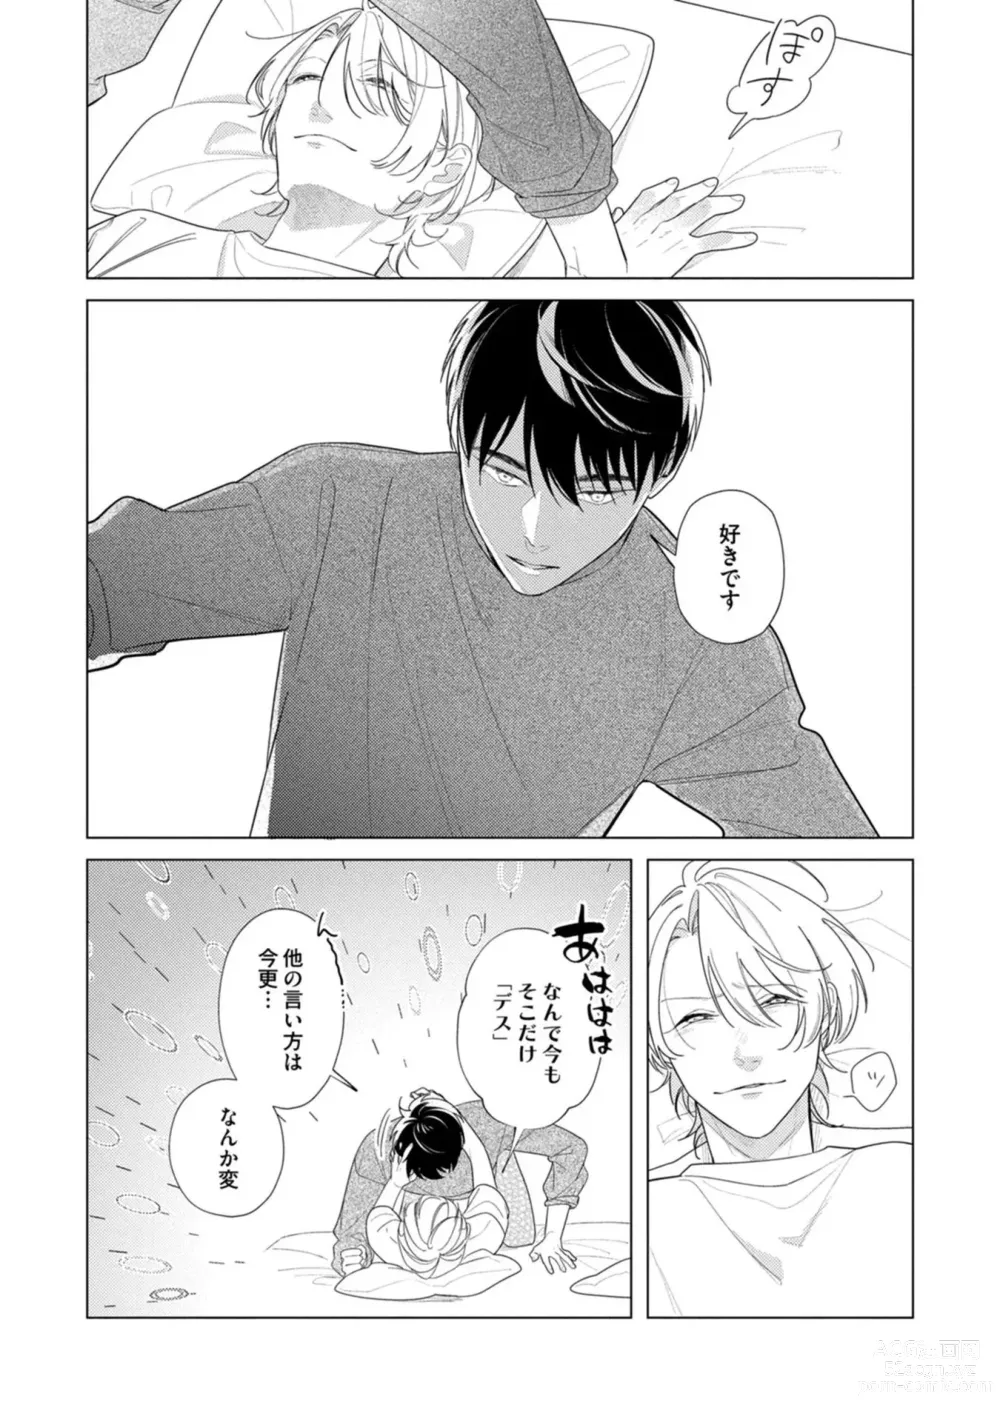 Page 162 of manga Yoru mo, Asa mo